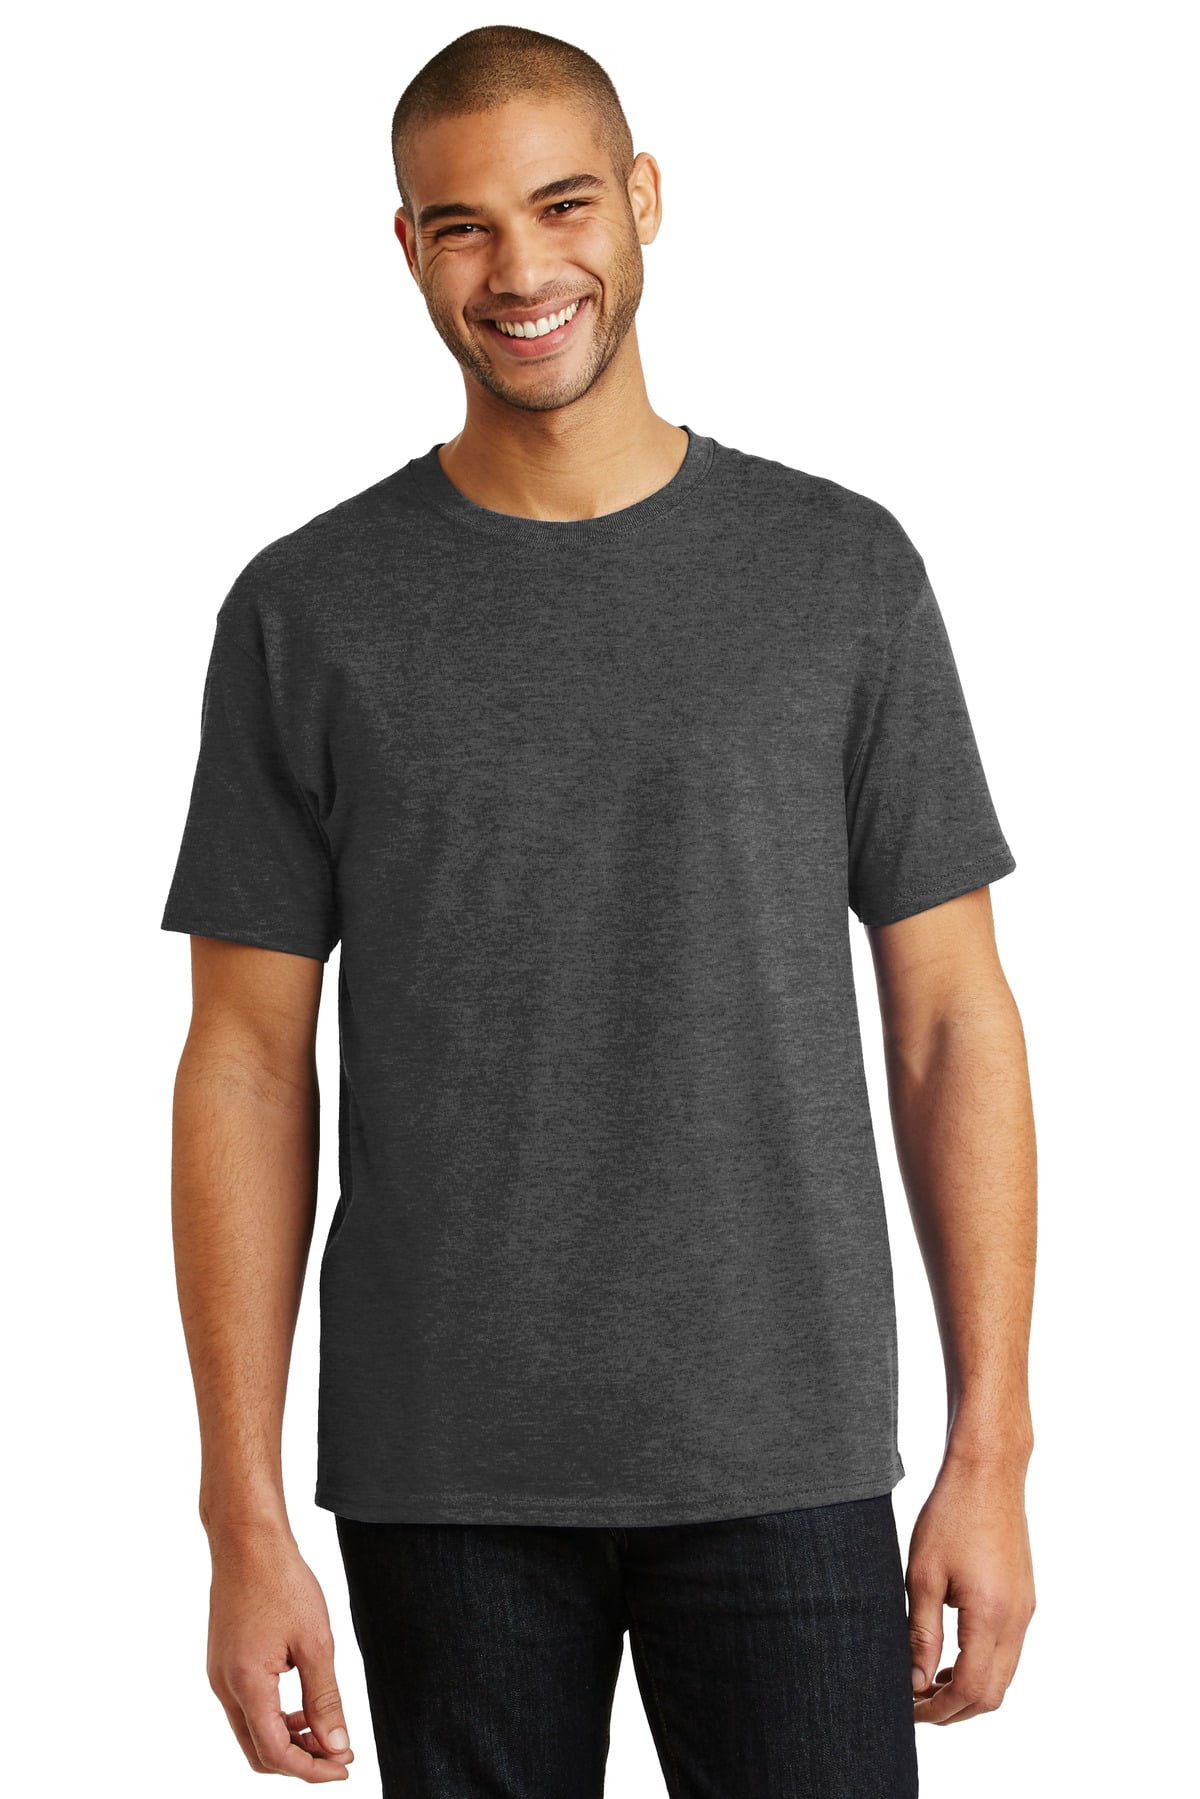 Hanes Men's ComfortSoft Heavyweight 100% Cotton Tagless T-Shirt 5250 S-3XL NEW 